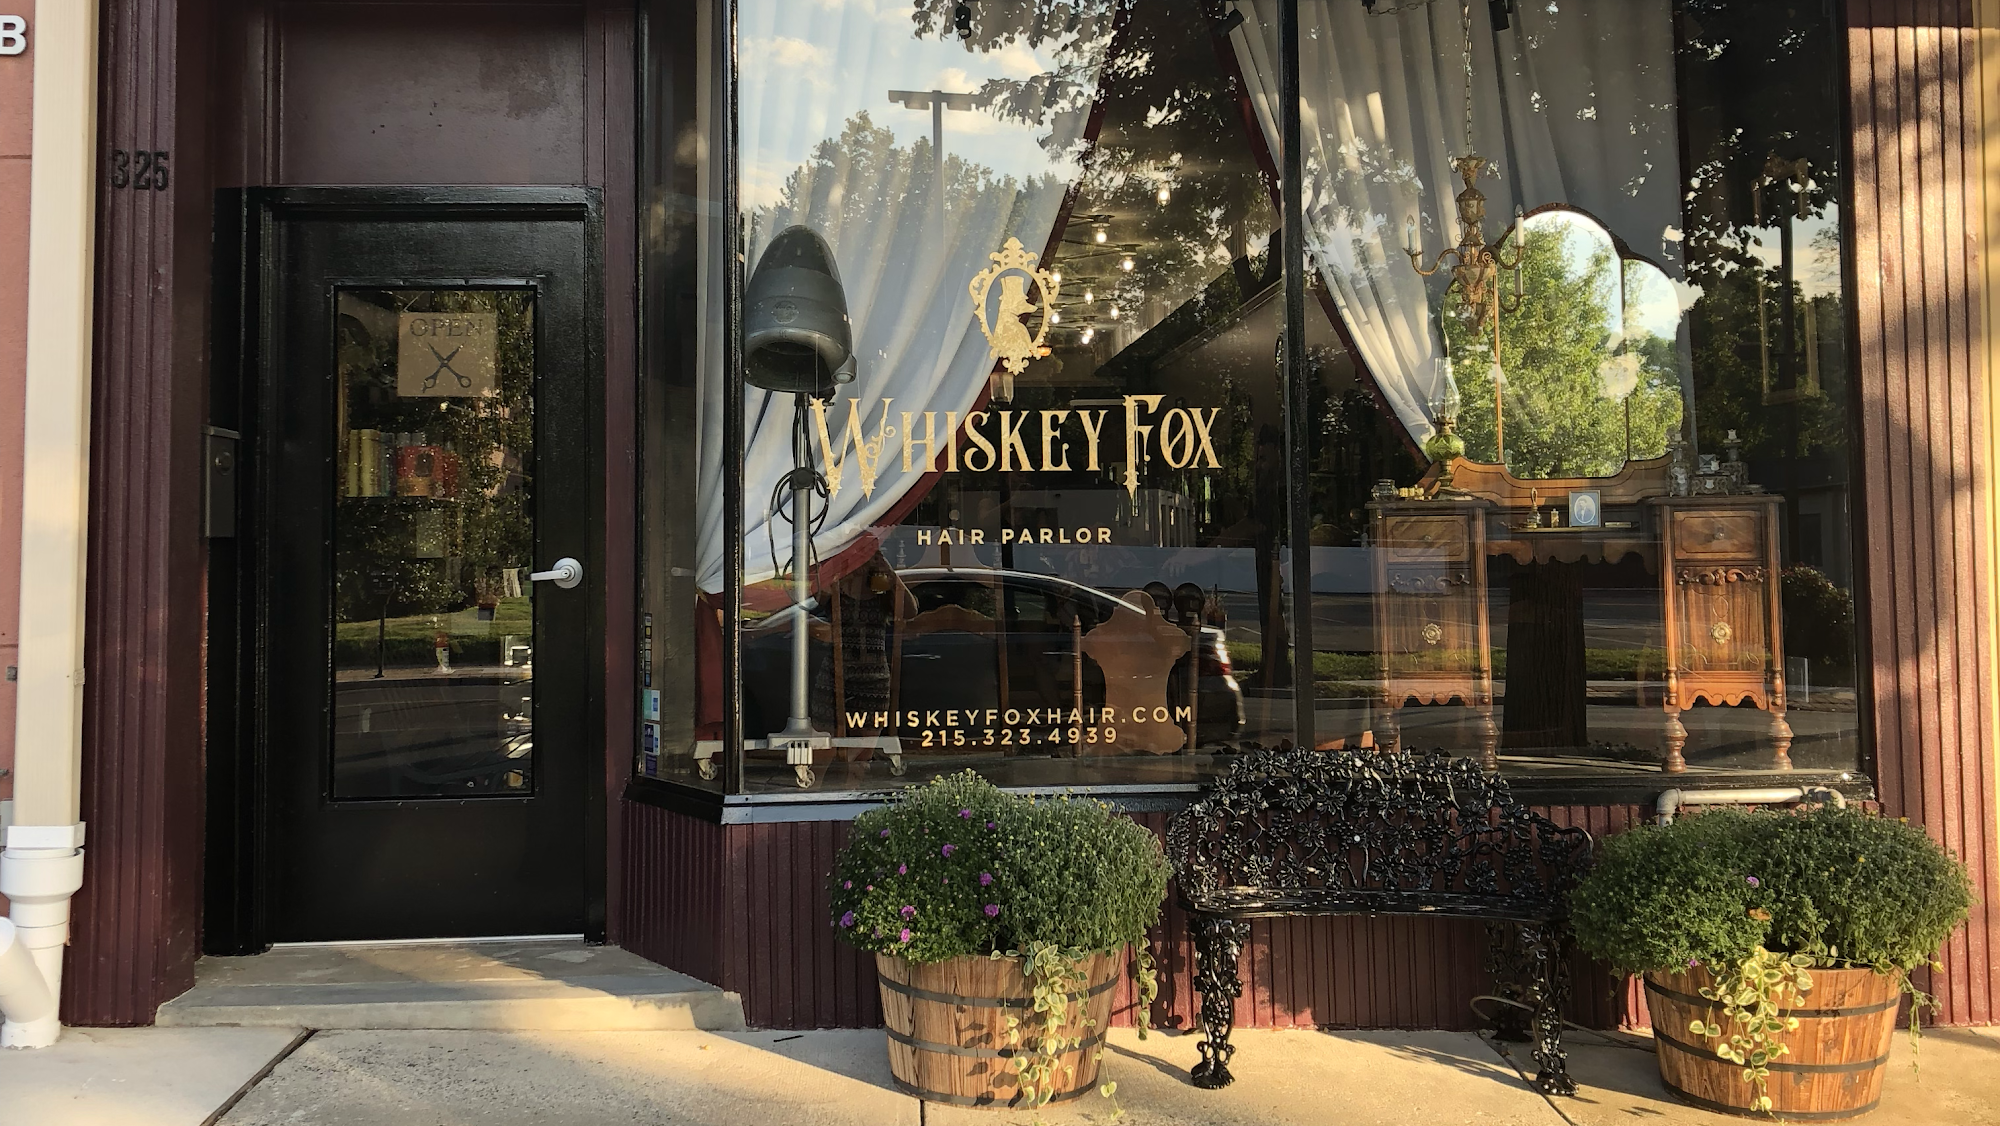 Whiskey Fox Hair Parlor